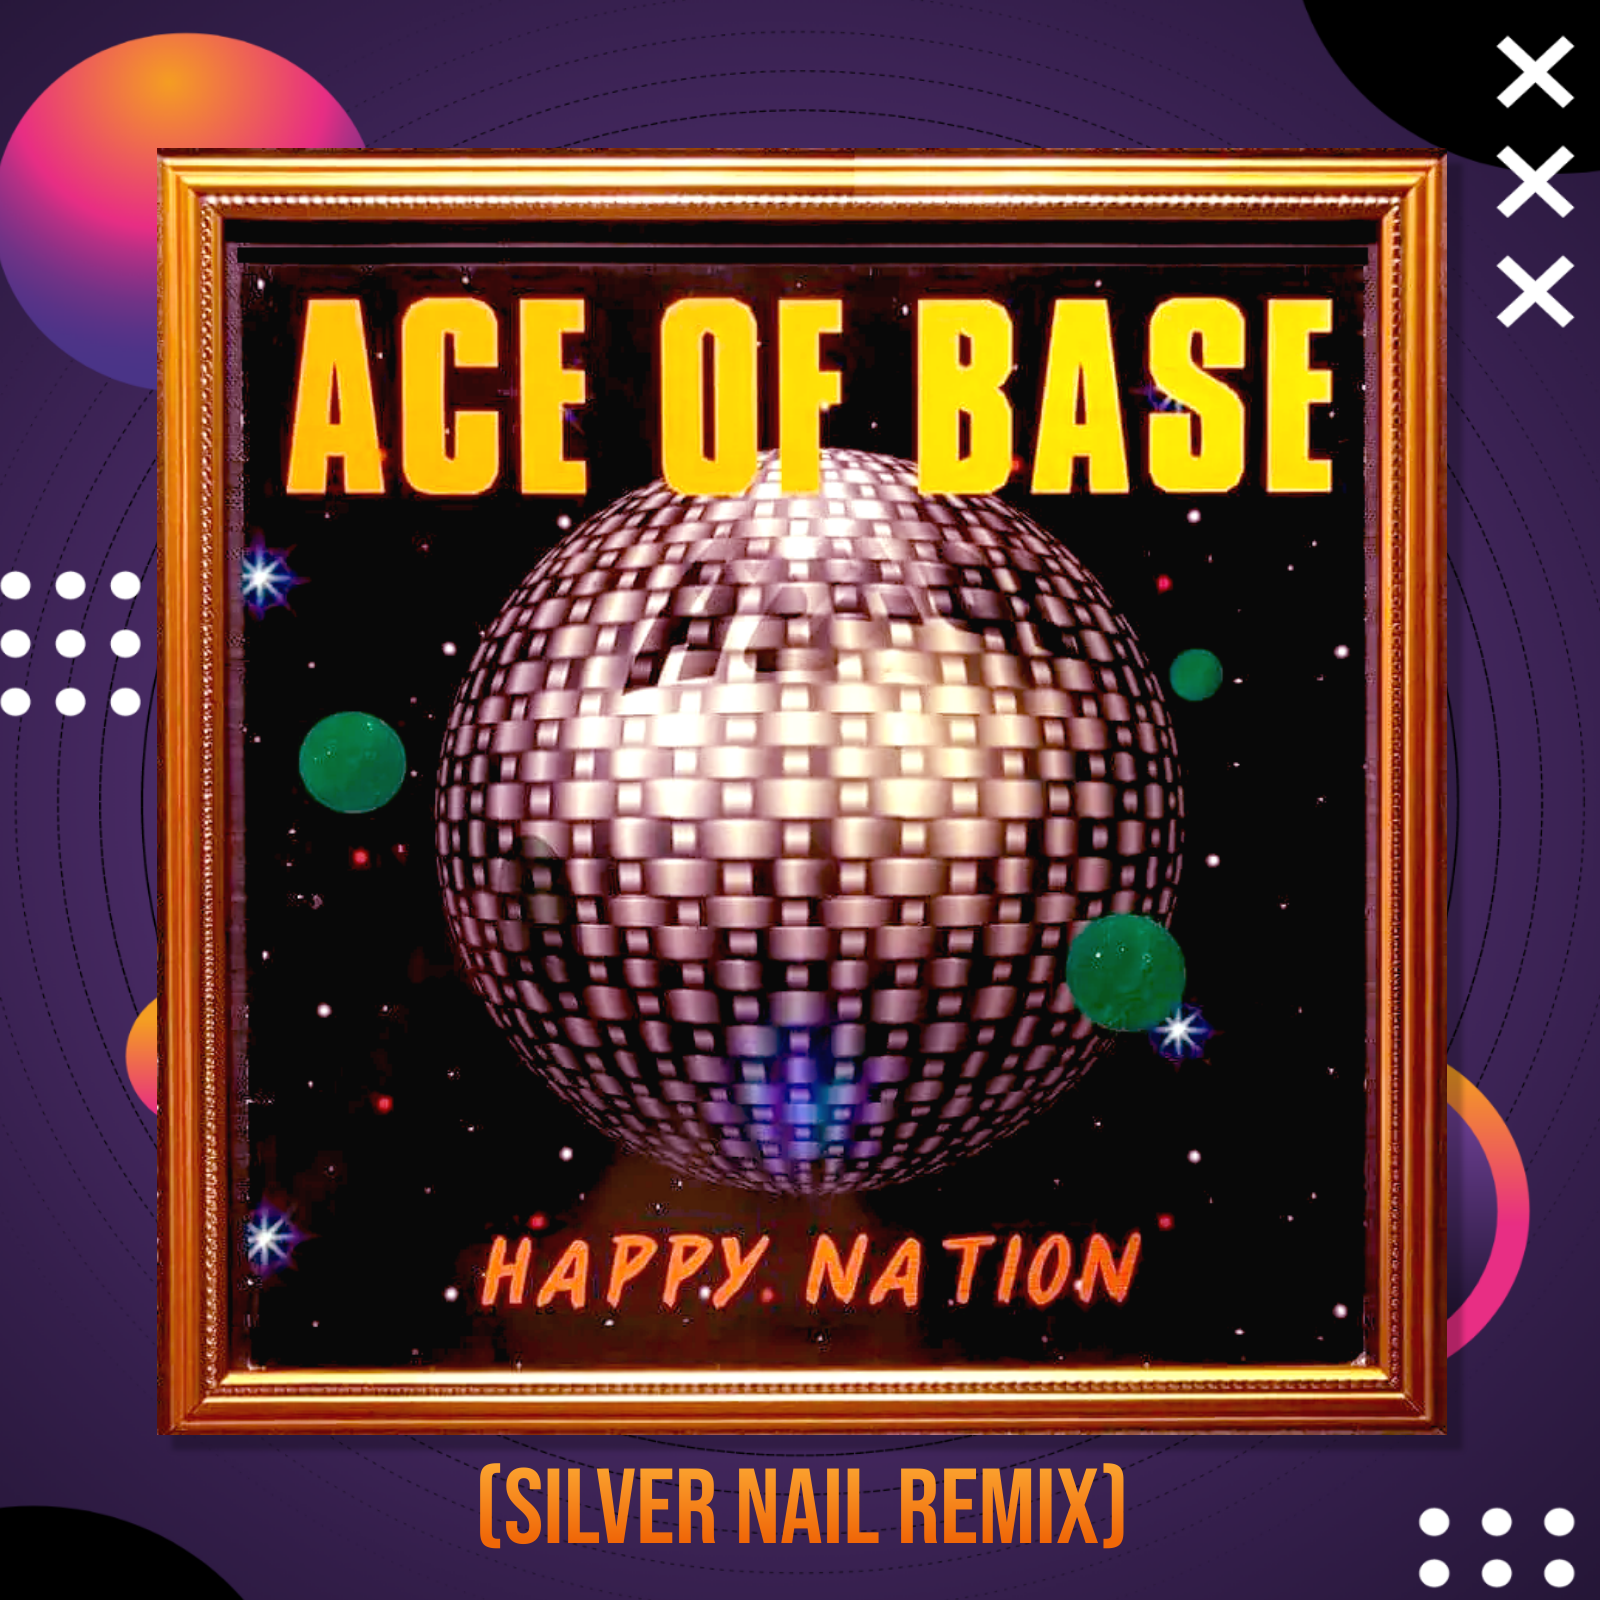 Happy nation fred. Хэппи натион. Happy Nation обложка. Ace of Base Happy Nation обложка. Хапи нецшег.